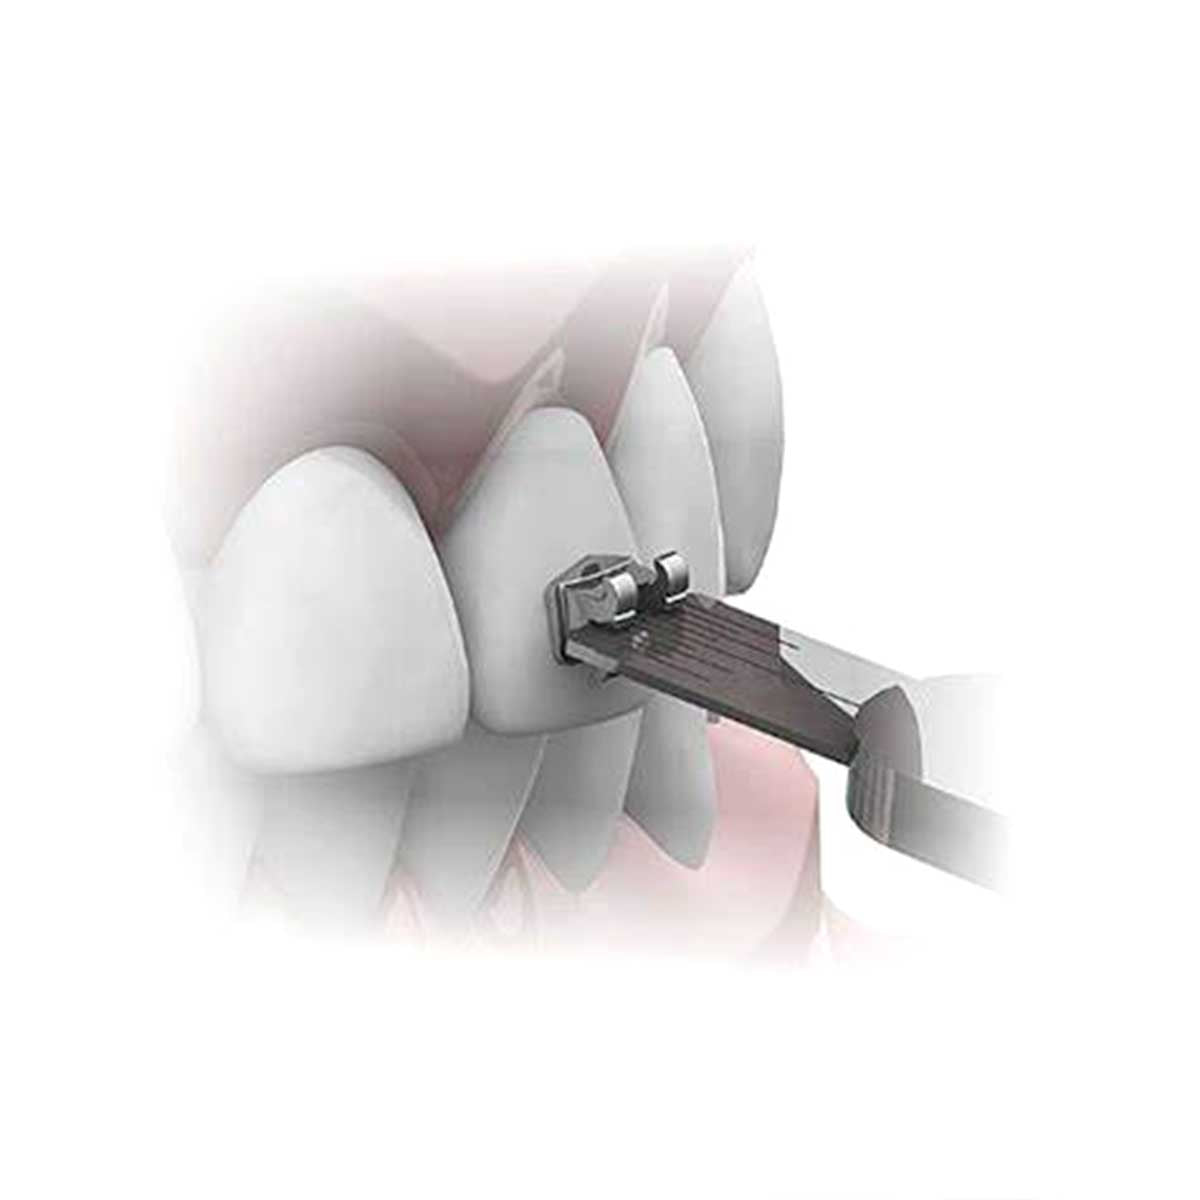 Morelli Orthodontic Tweezer With Aligner 144mm